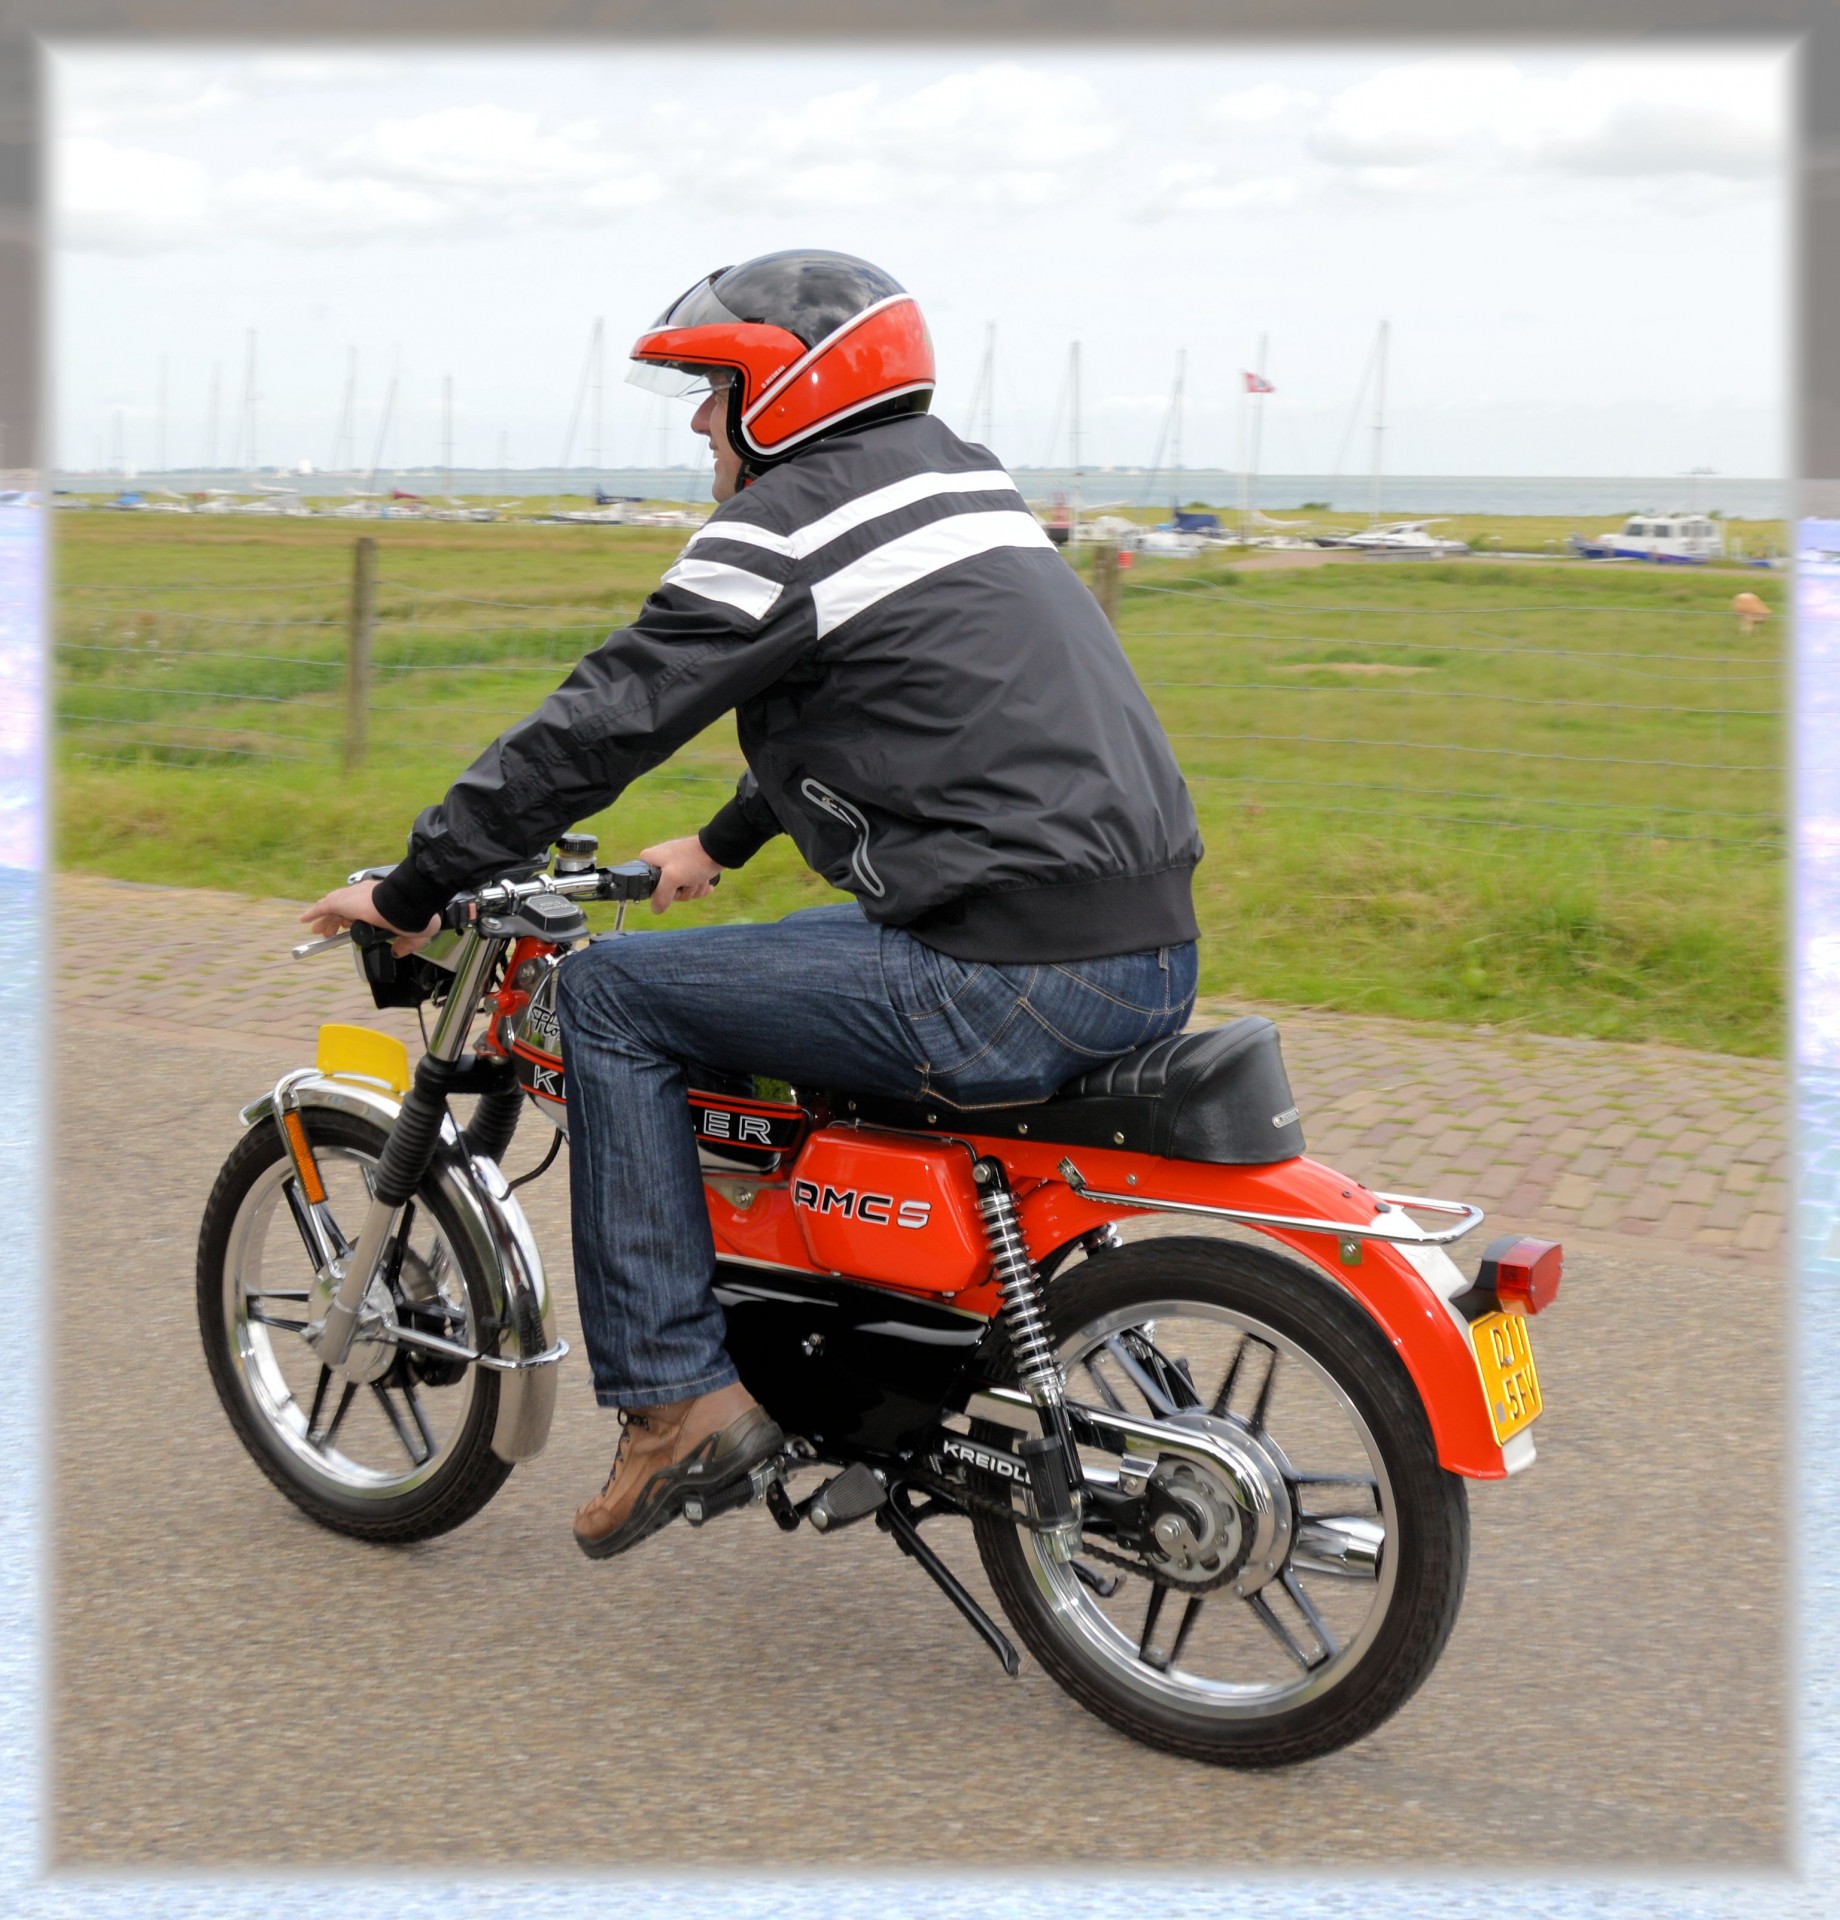 zundapp motorcycle club activities free photo